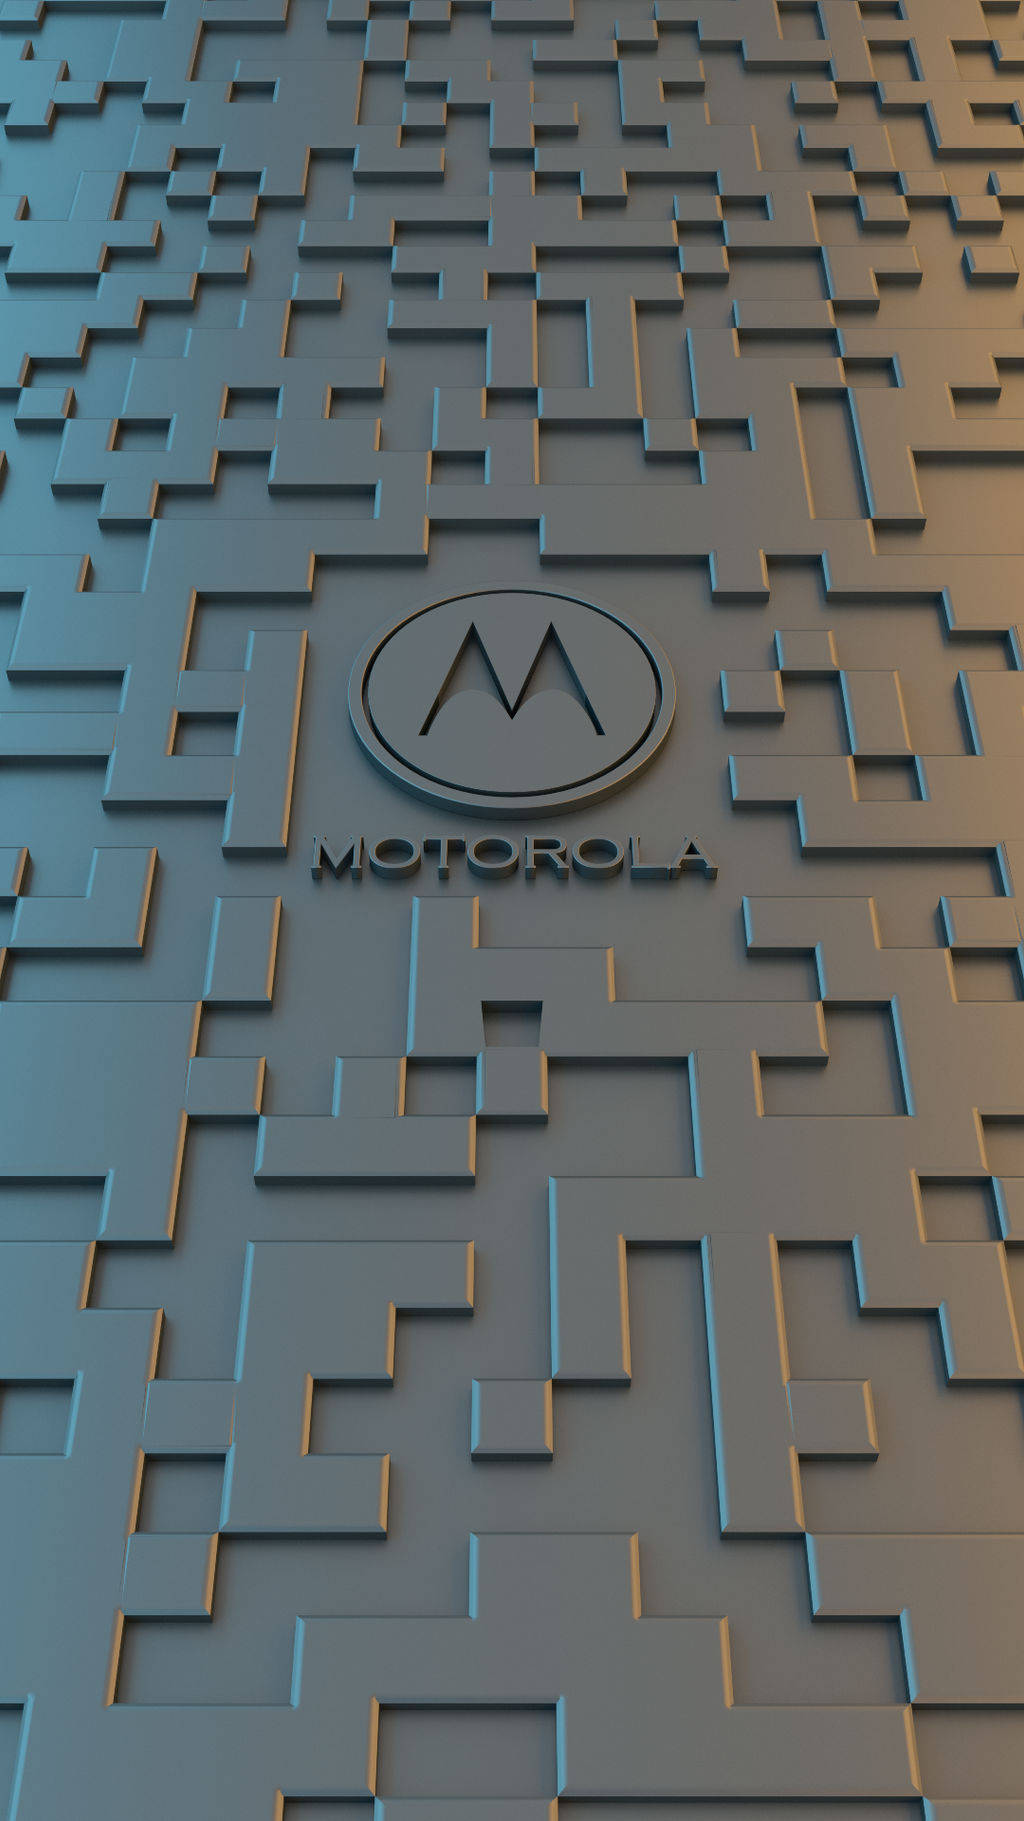 Motorola Maze Wall Background